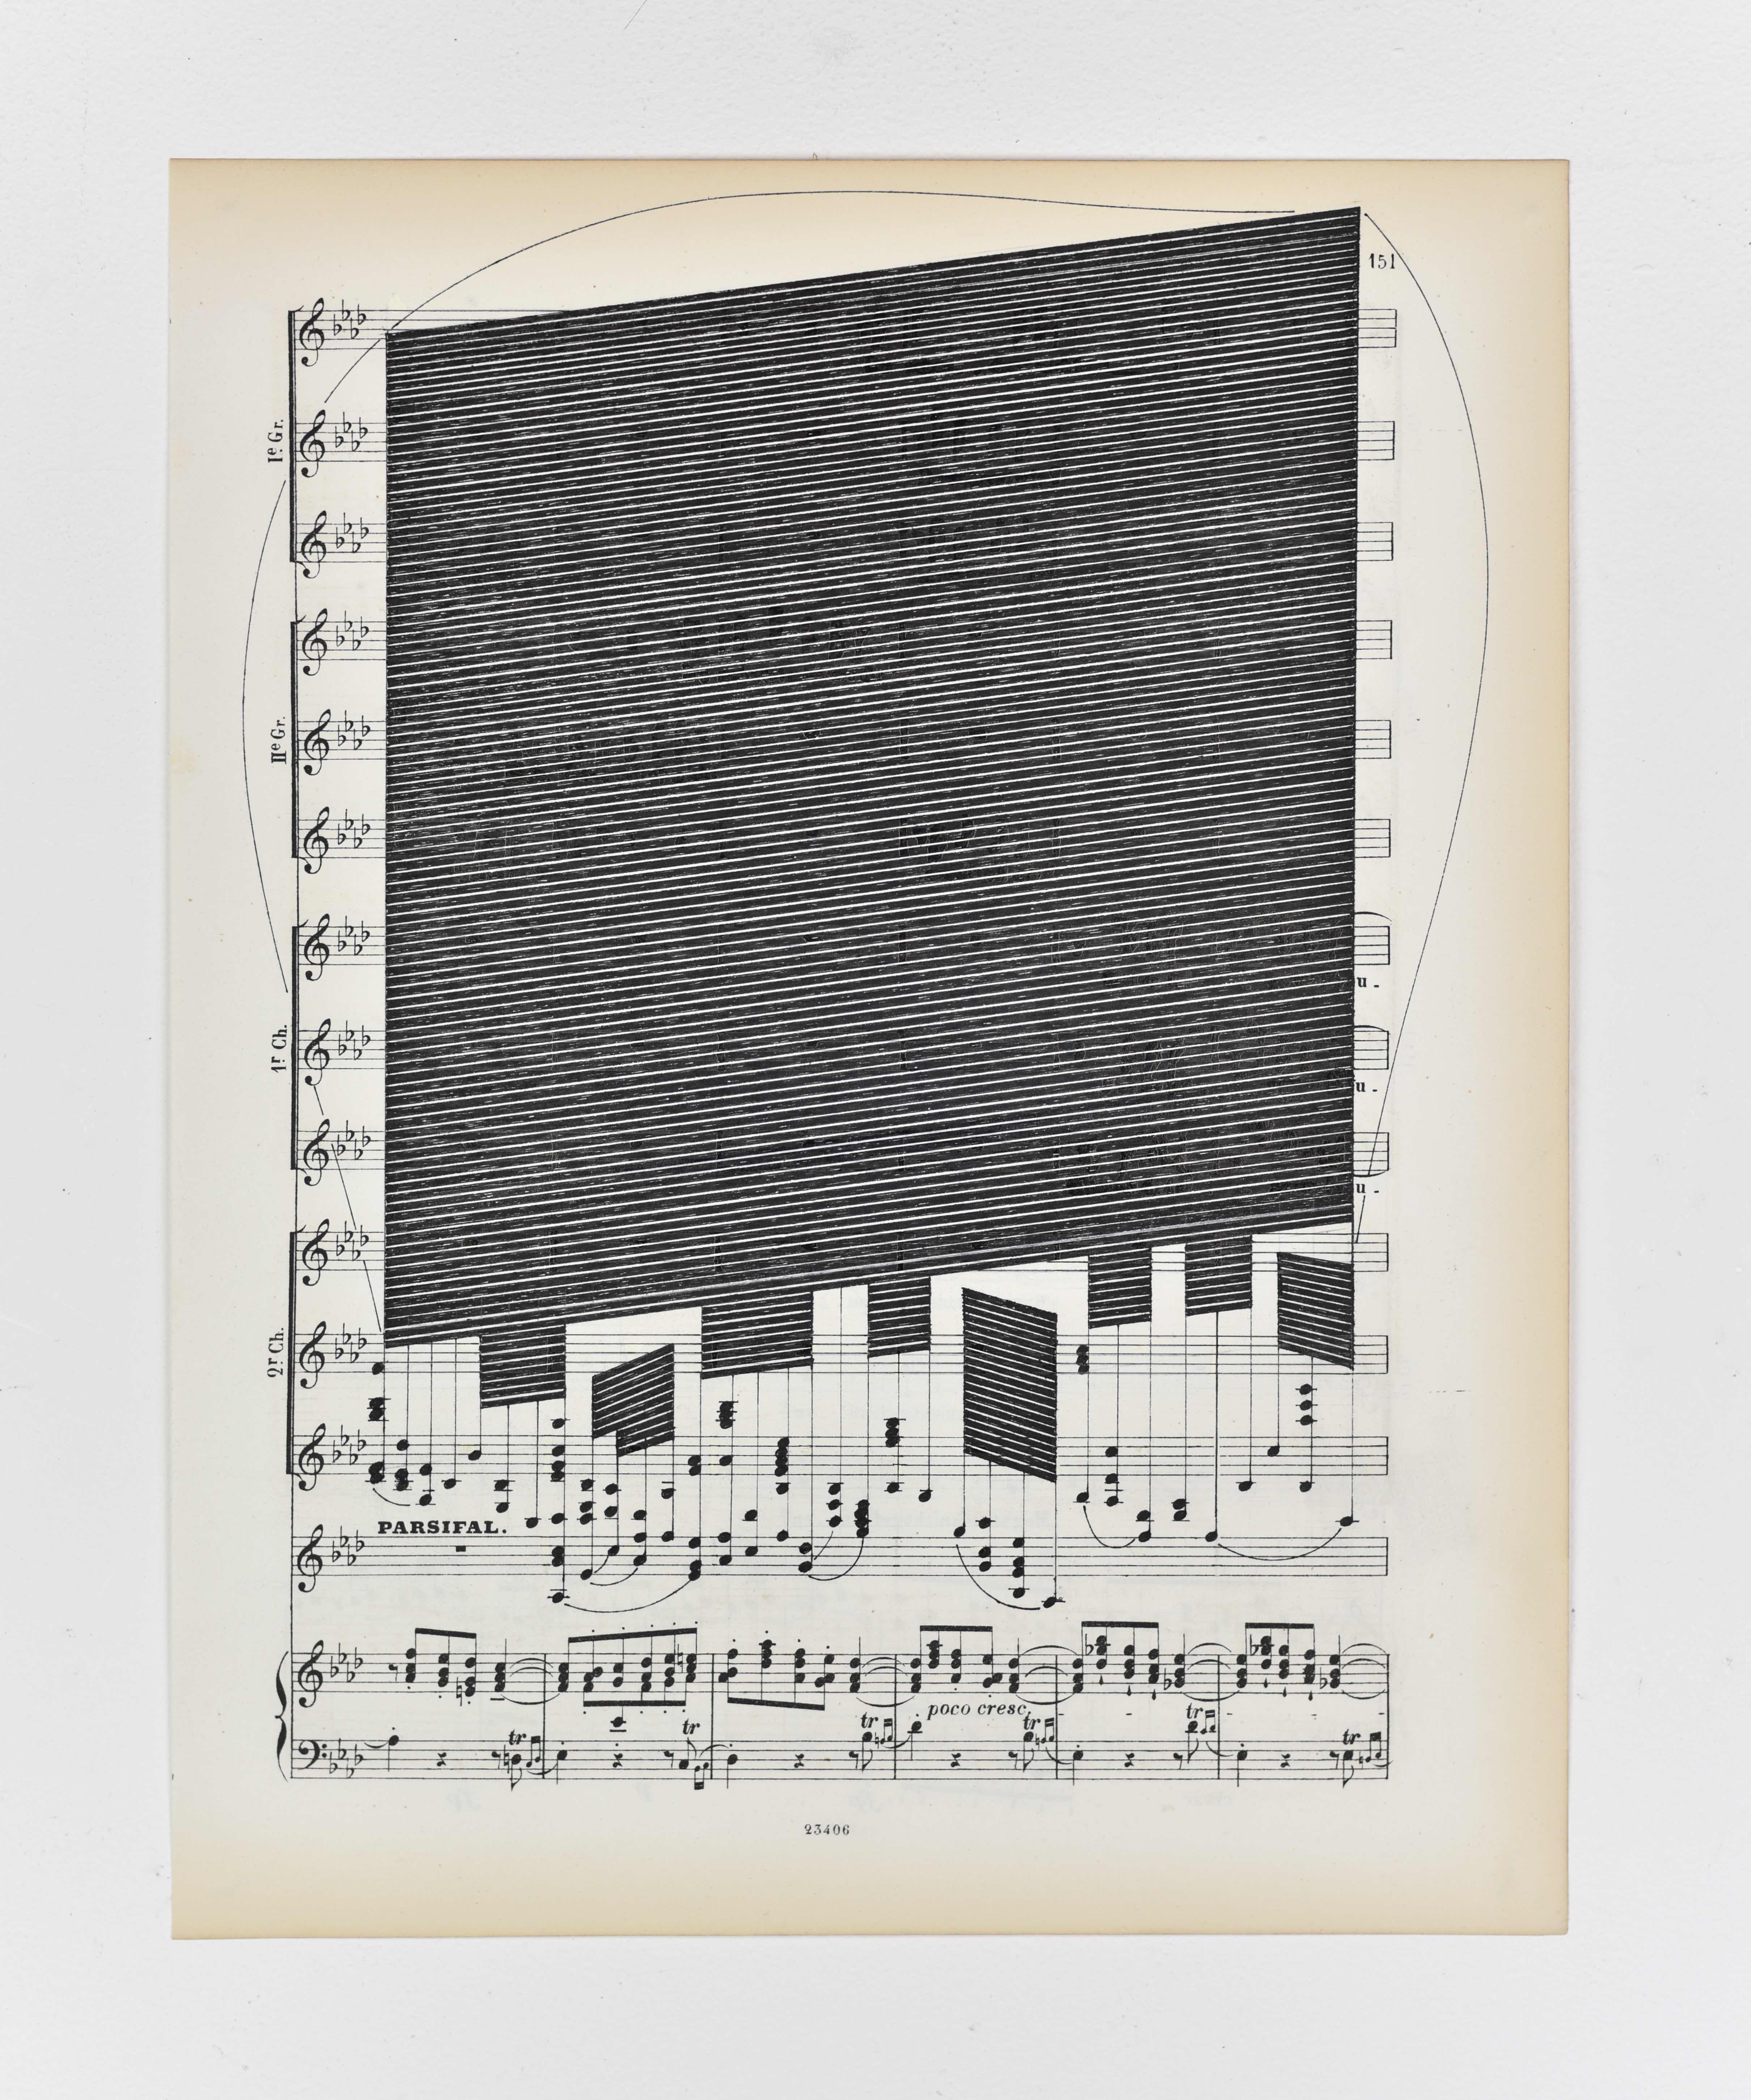 Jonathan Callan, 'Things I'll never hear, P. 151.’, Paper, 33.5 x 26.5cm, 2022